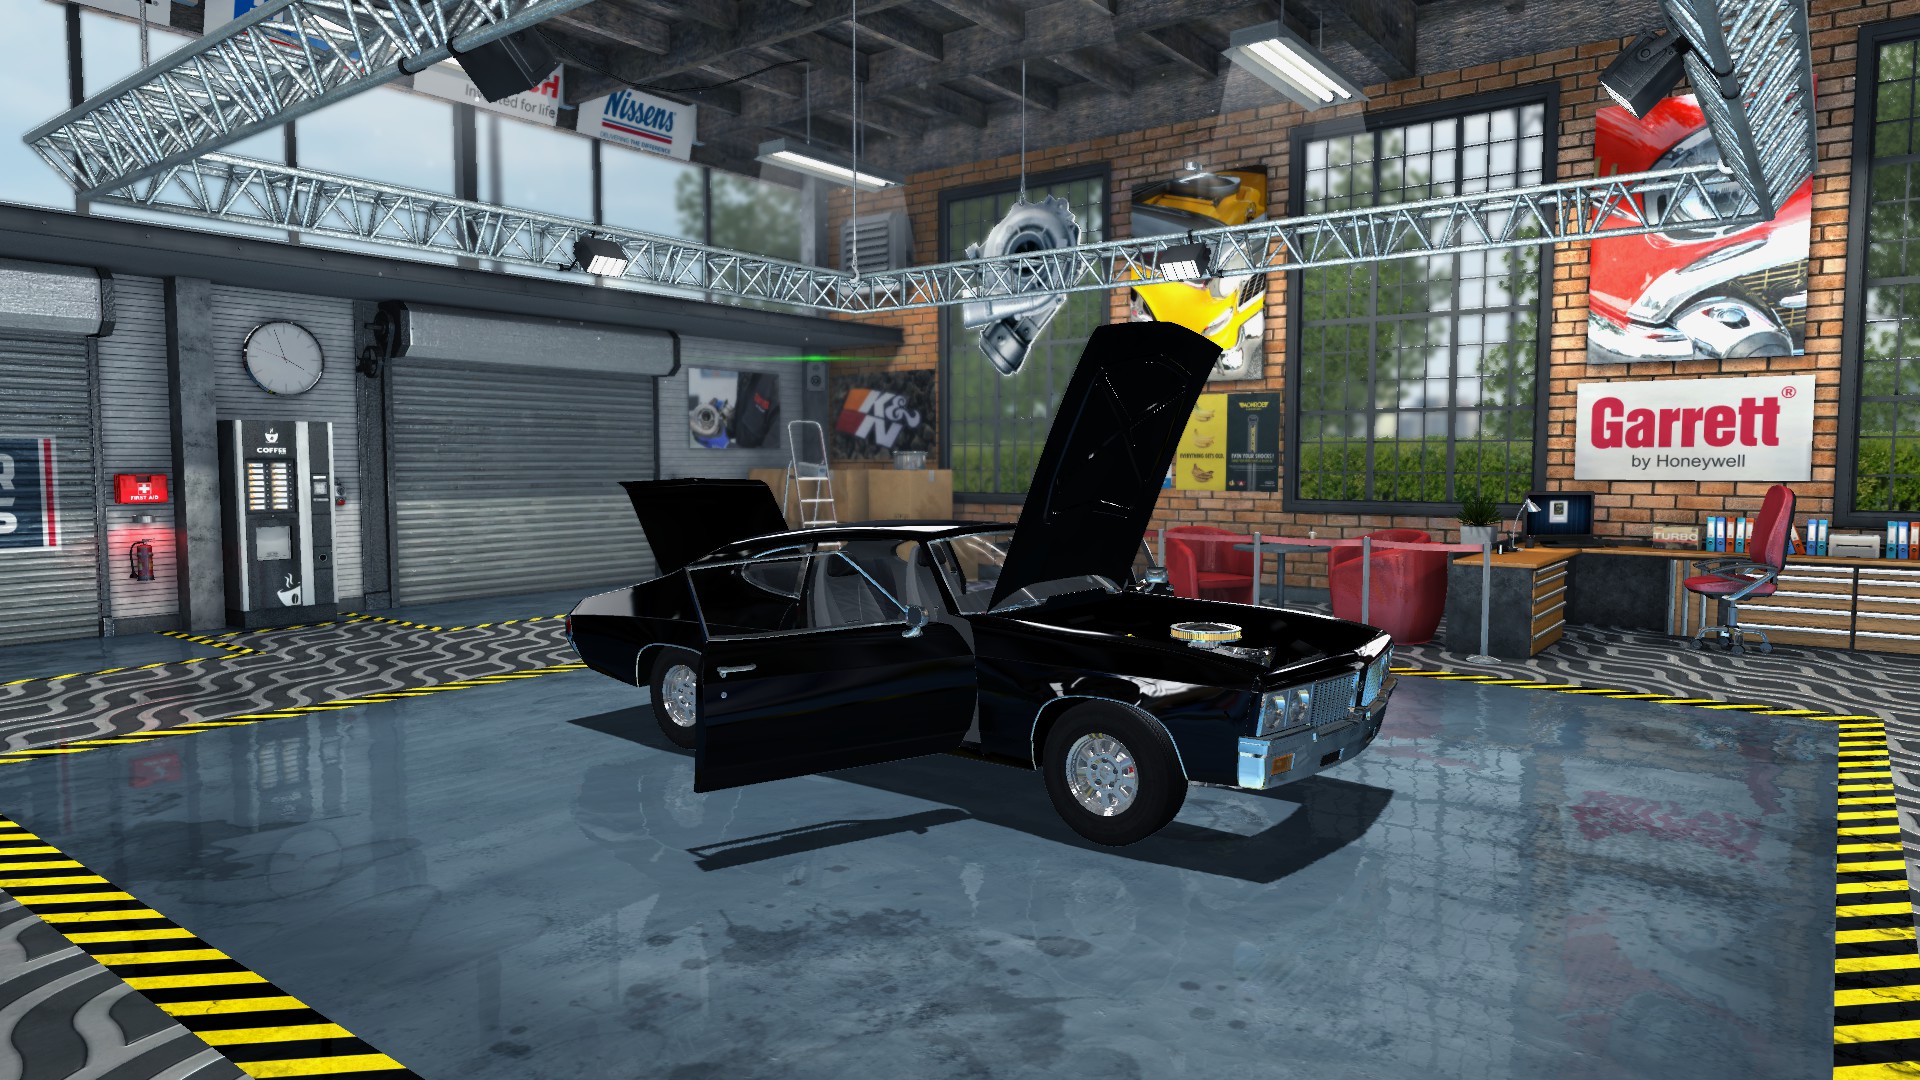 car mechanic simulator 2015 mods